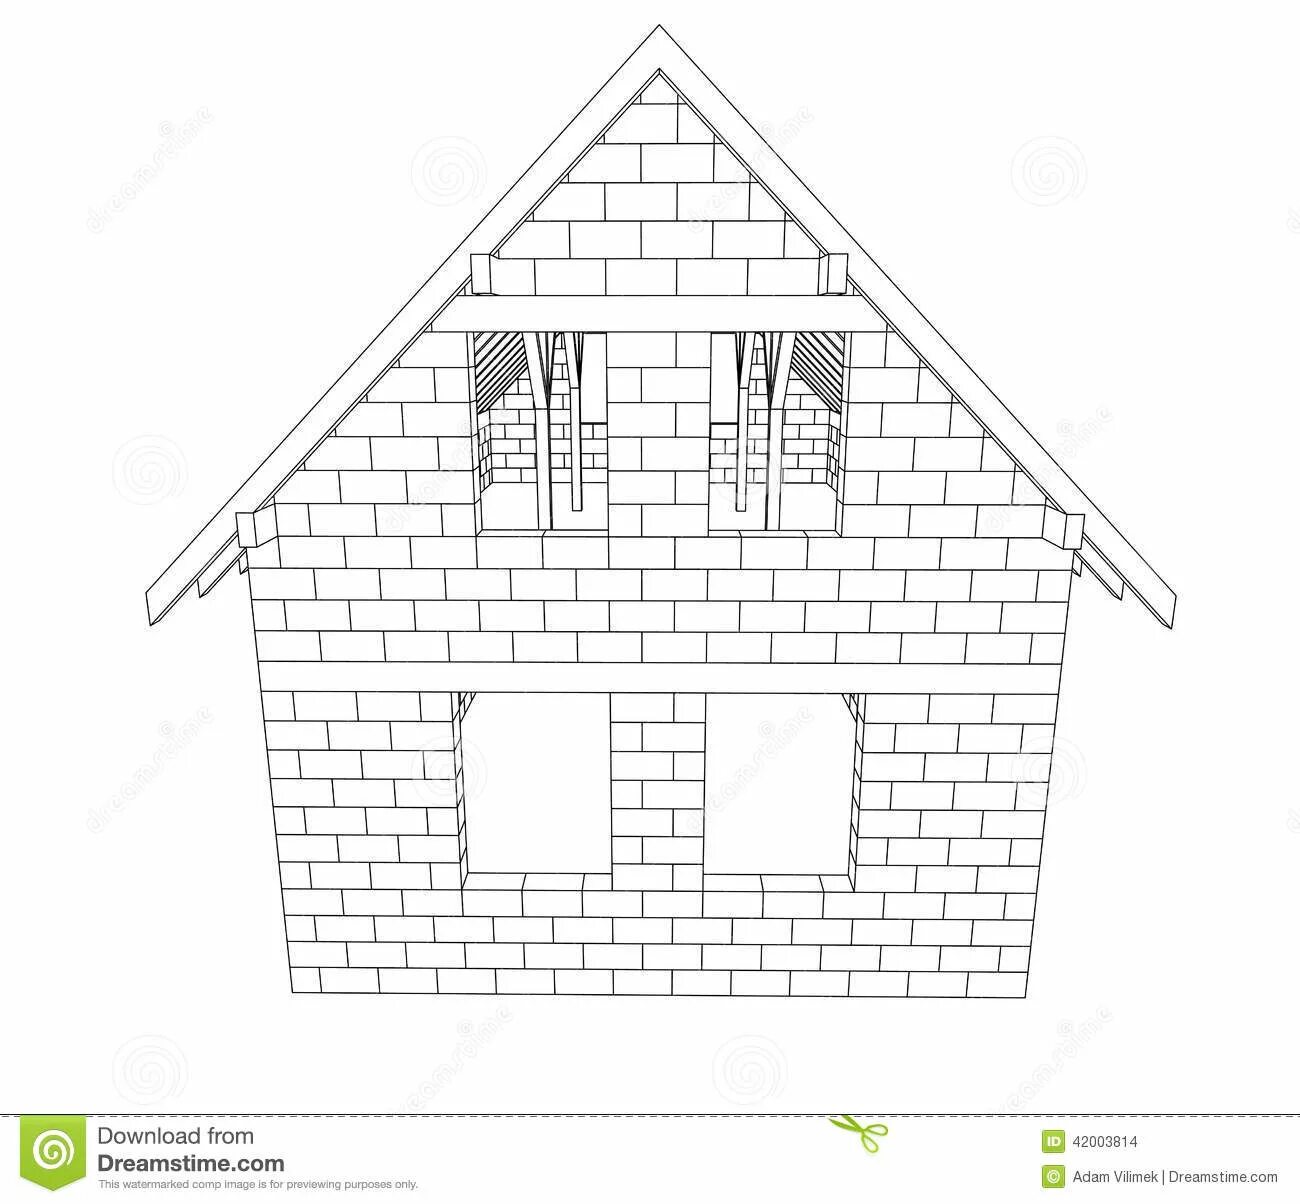 Brick house #5